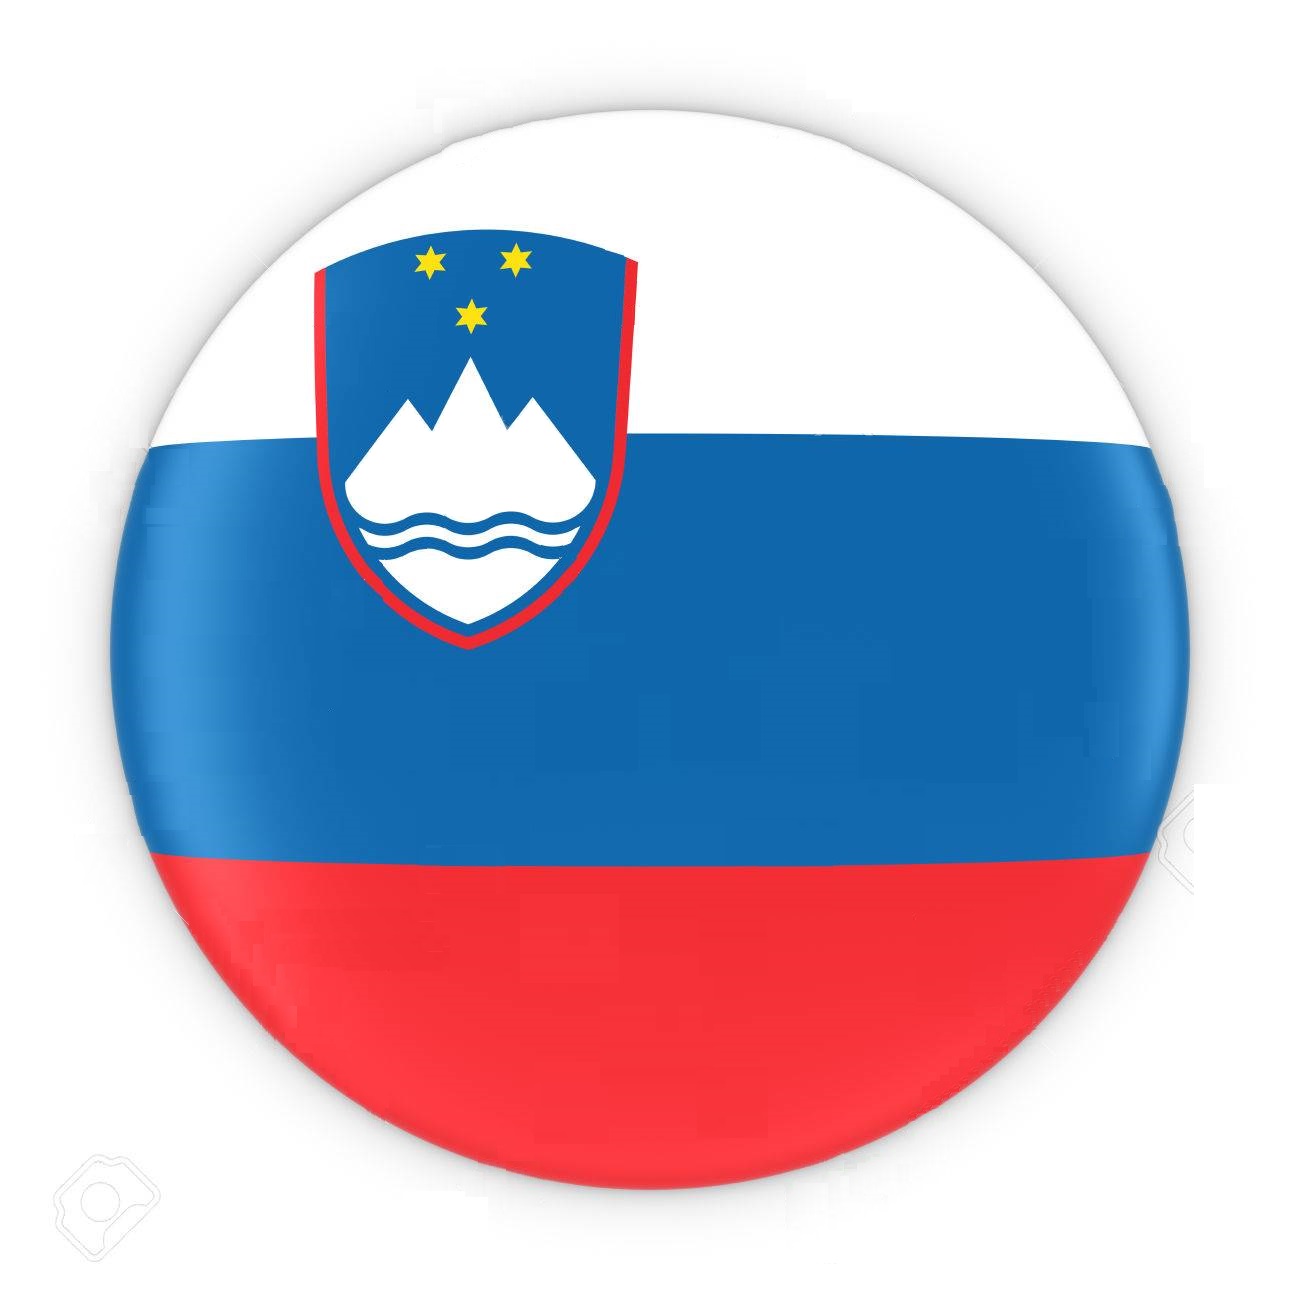 Slovenian Flag Button - Flag of Slovenia Badge 3D Illustration